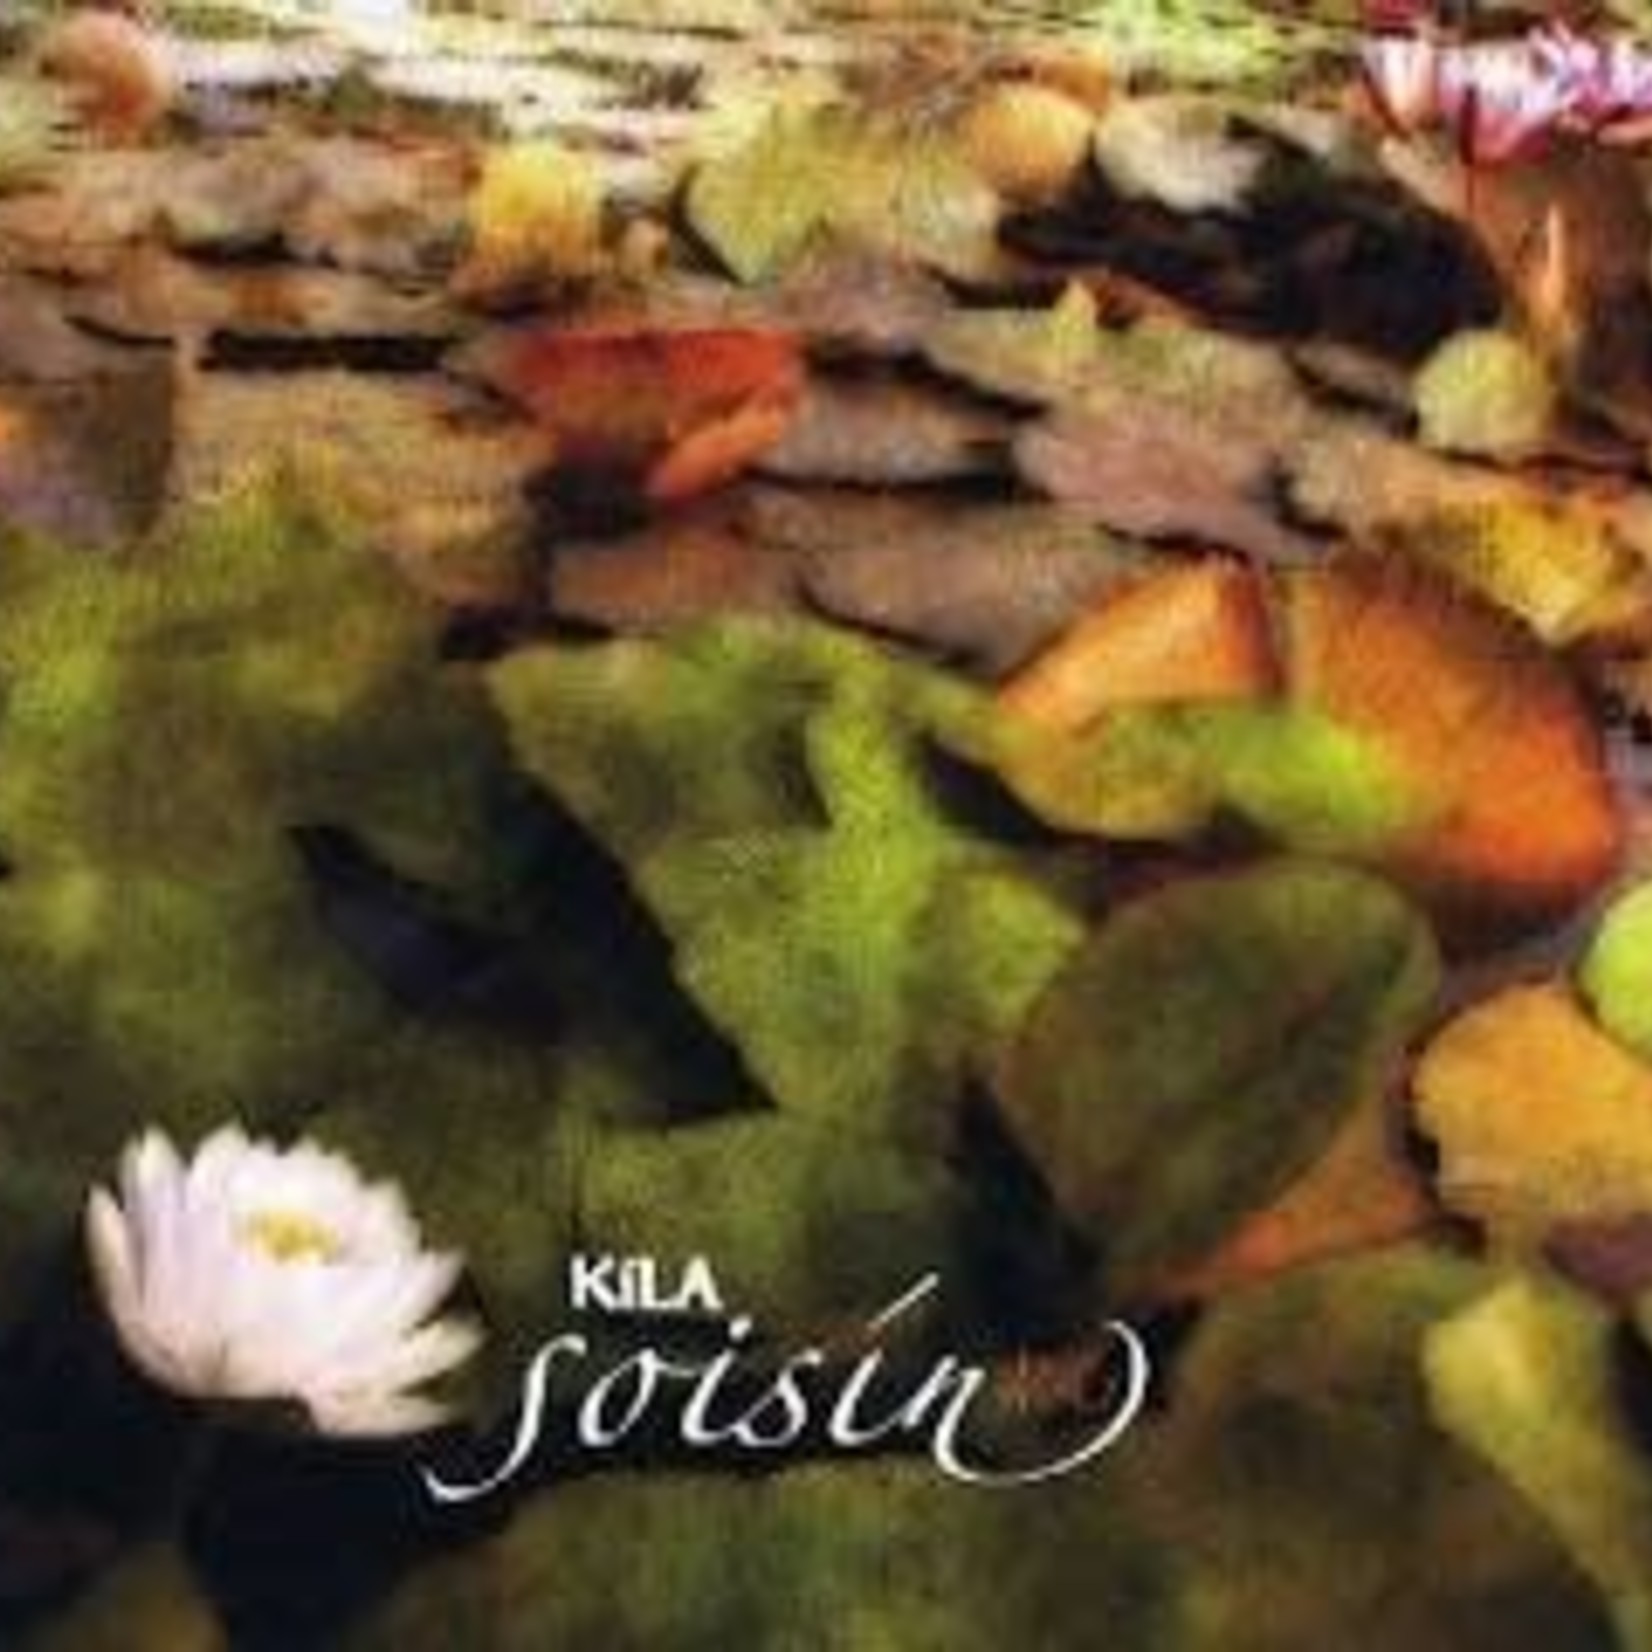 Kila Kila Soisin CD